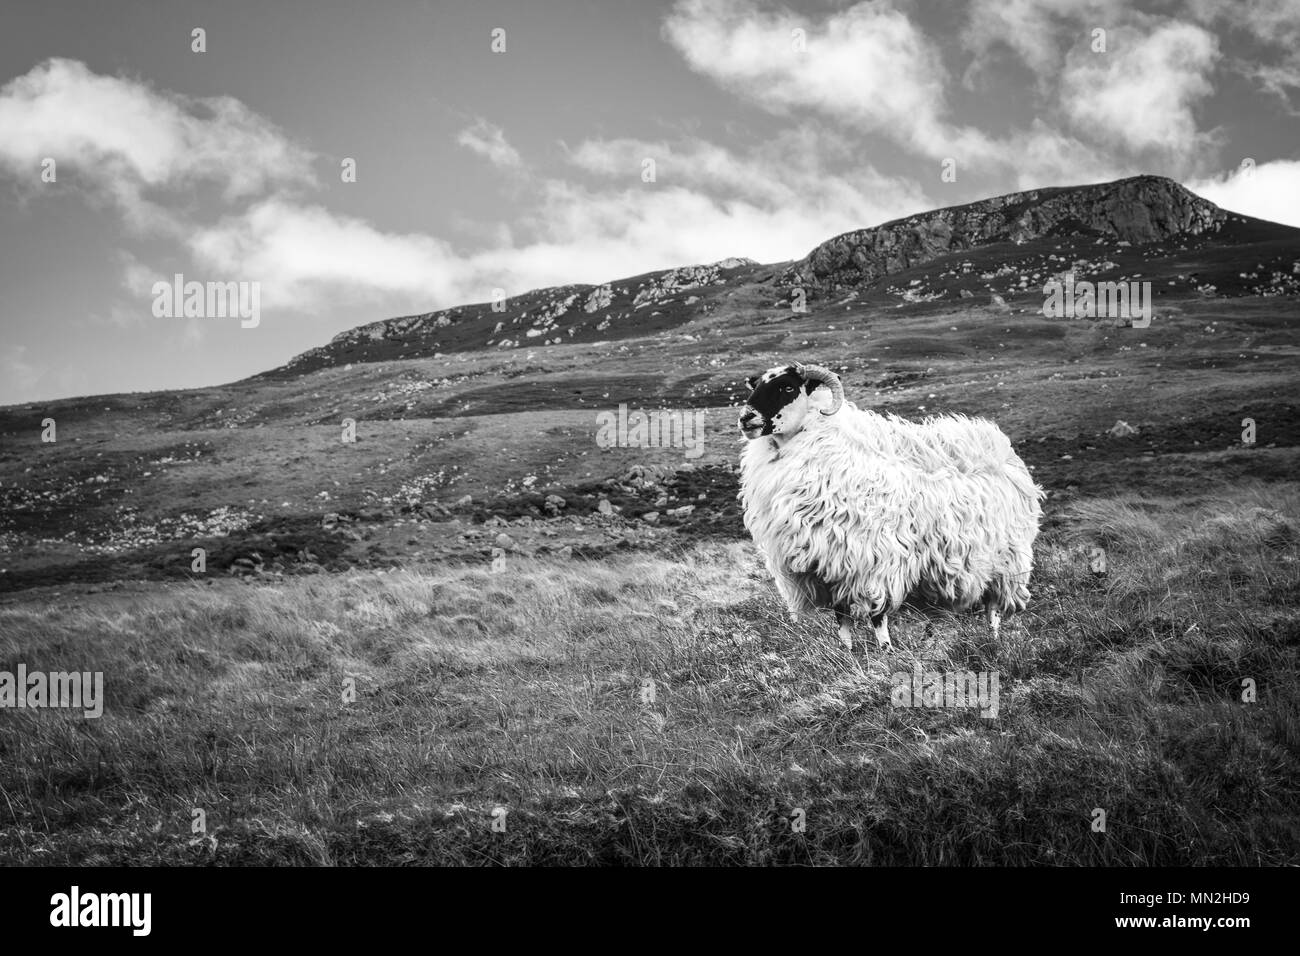 Immagine di una pecora su una montagna in Donegal Irlanda Foto Stock